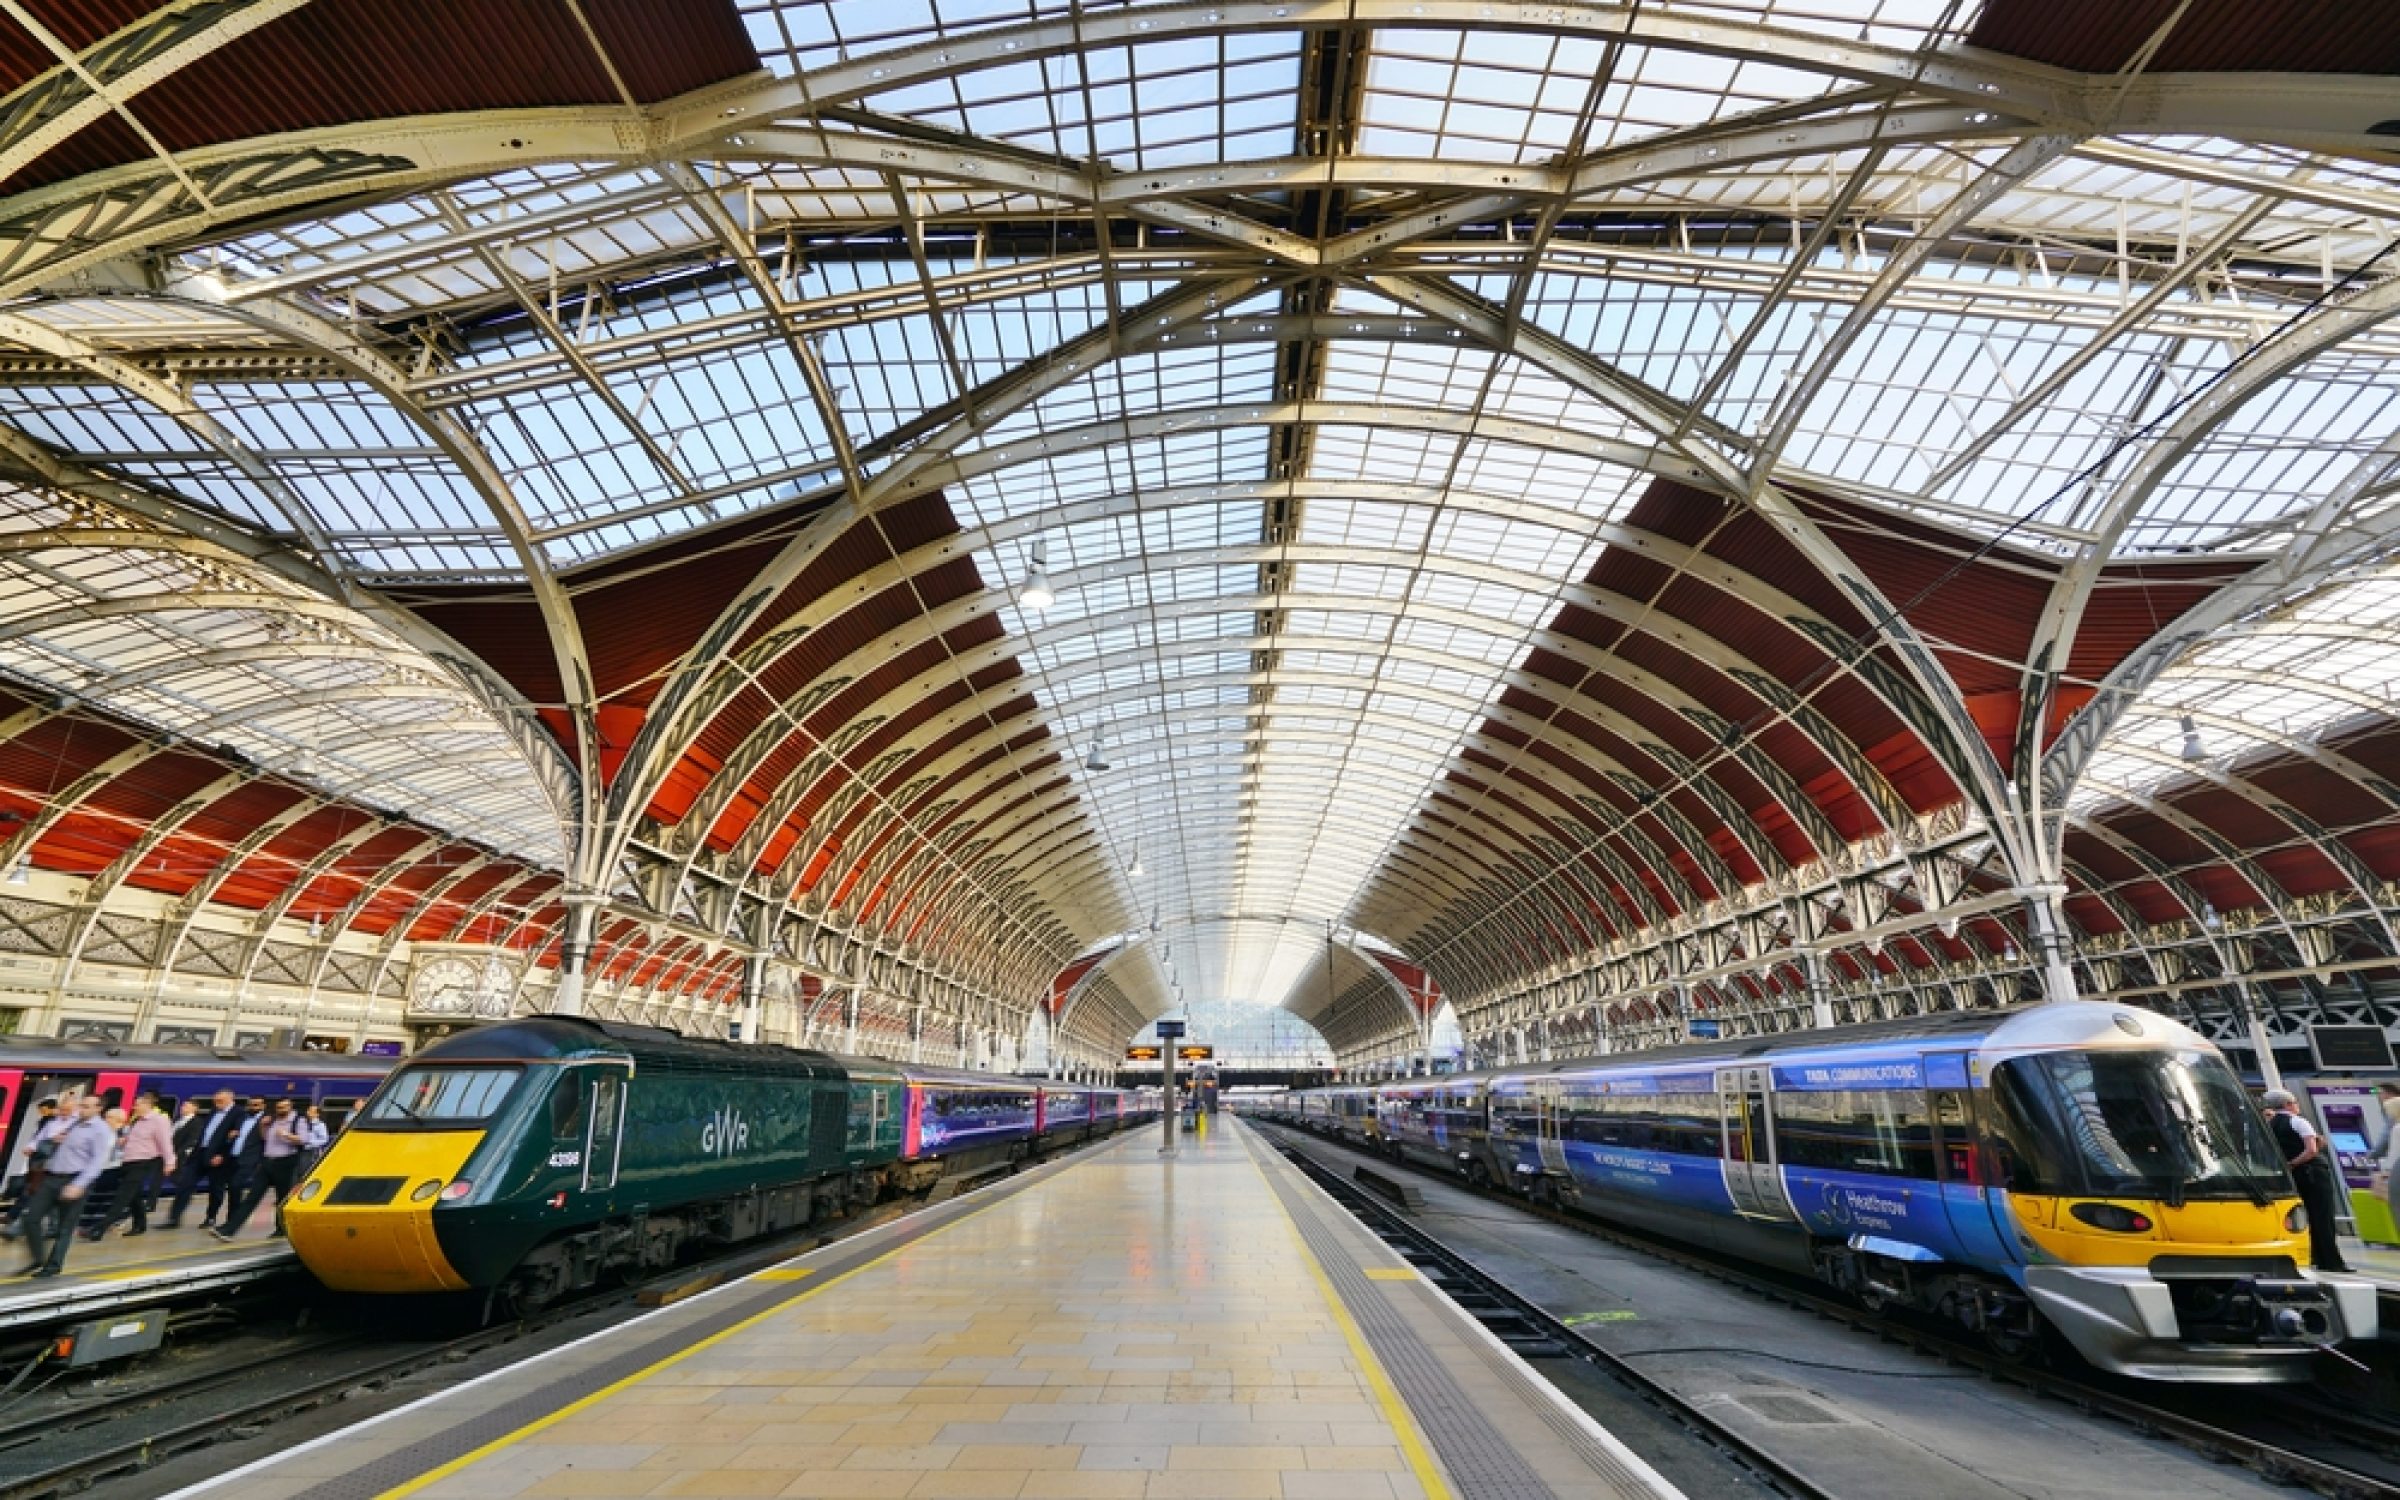 London paddington station - public transport, trains